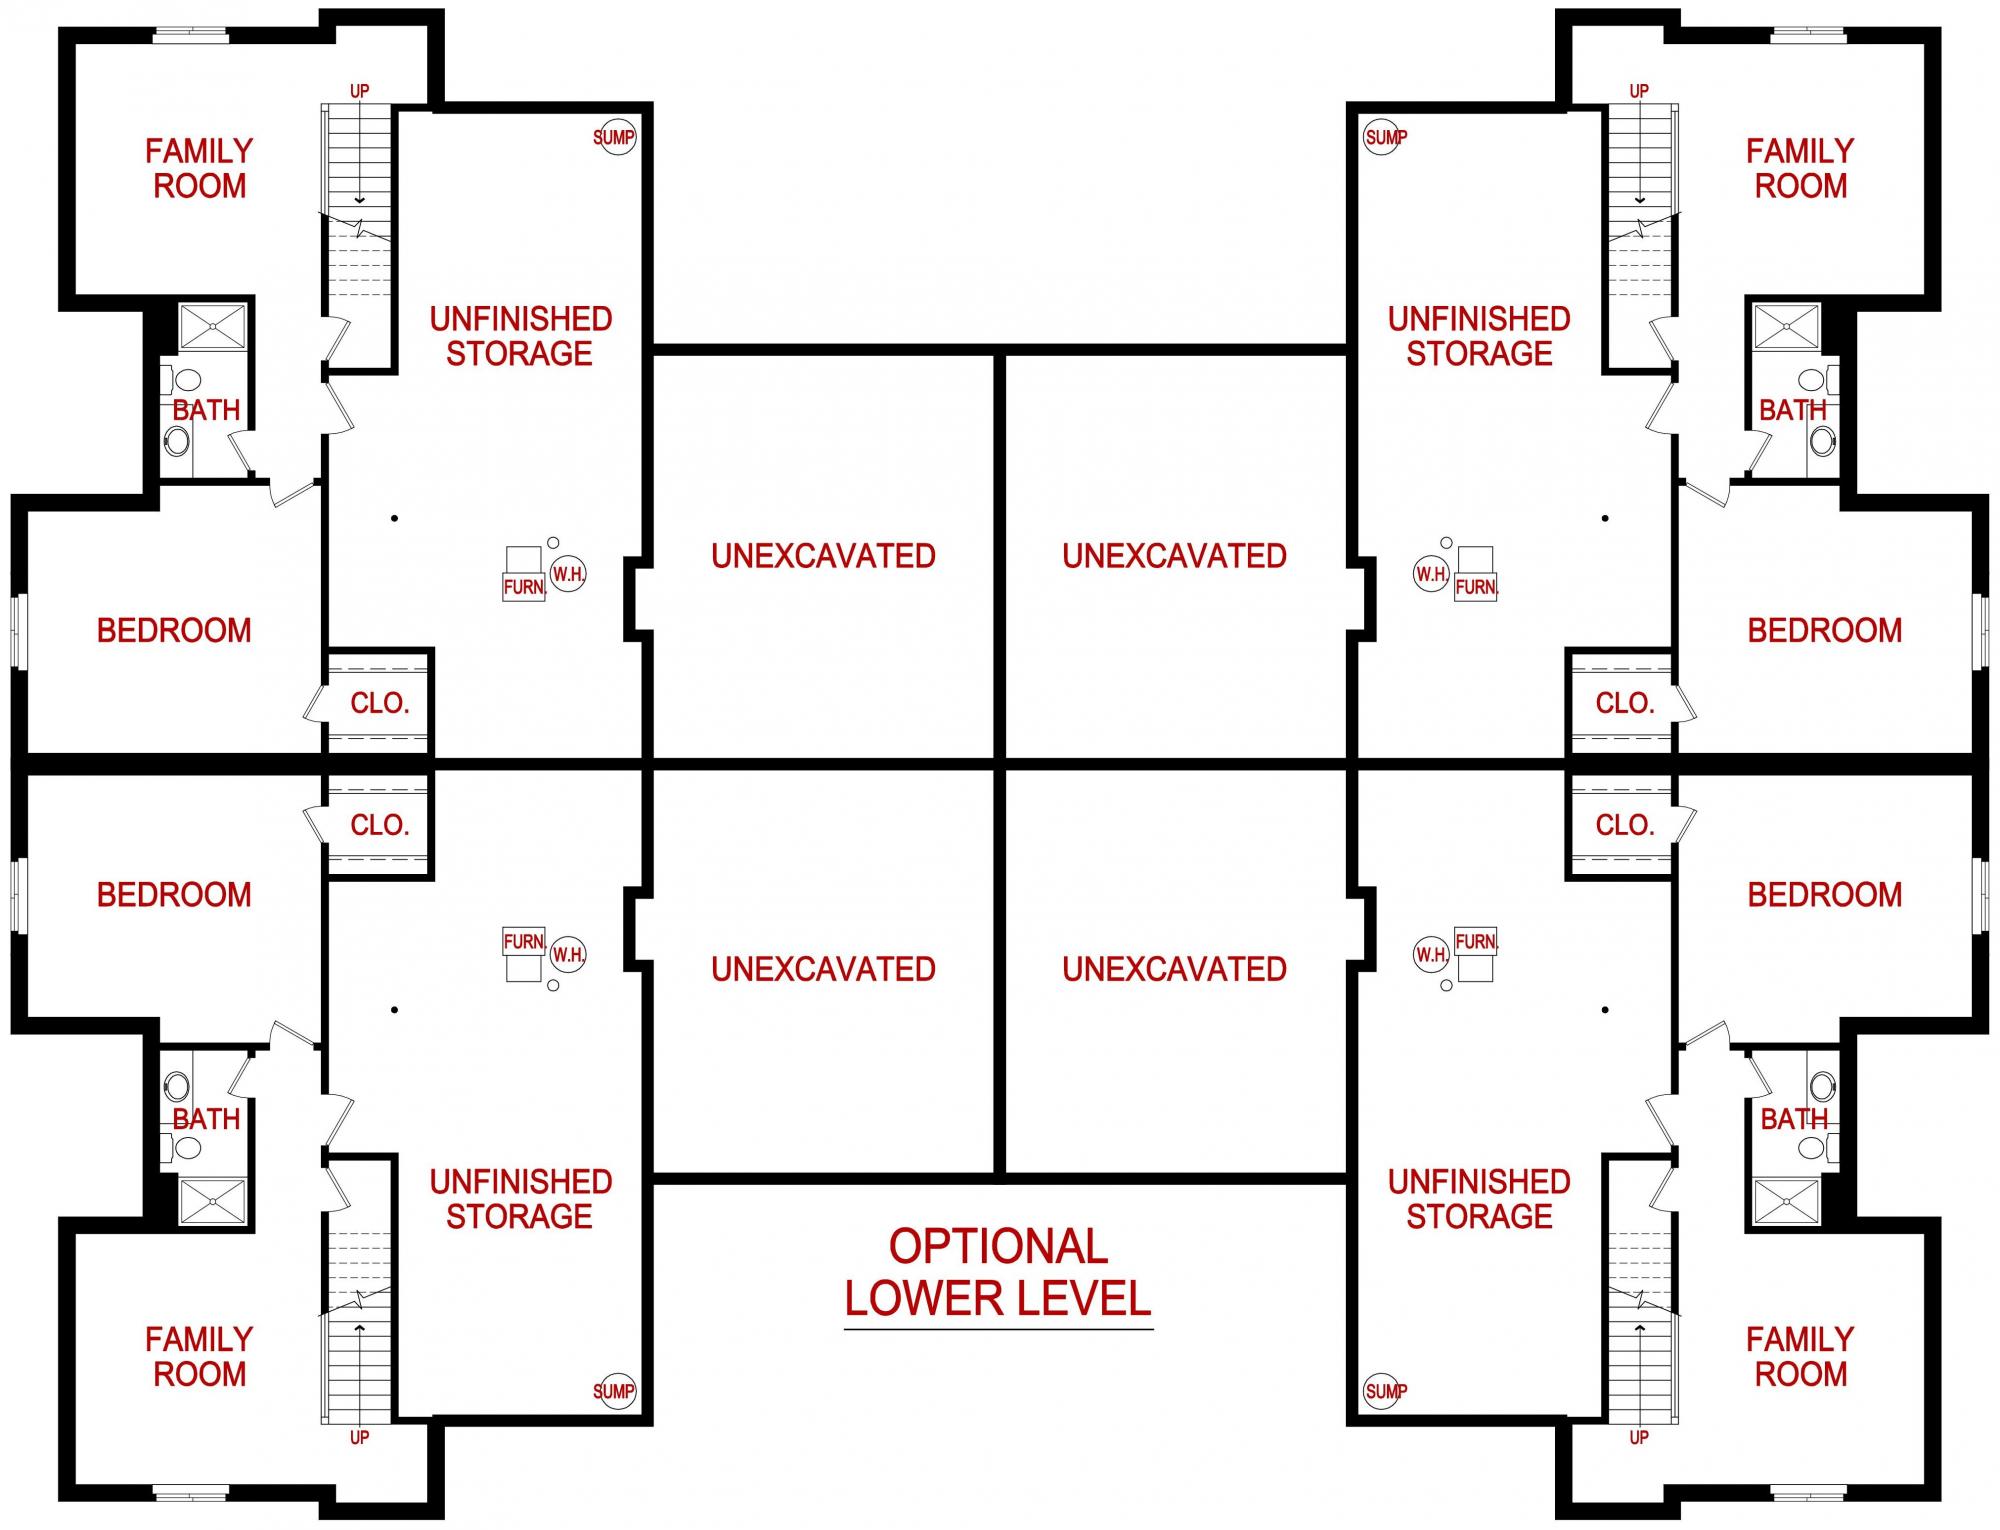 Lower level floor plan for the minor model from Lambie custom homes